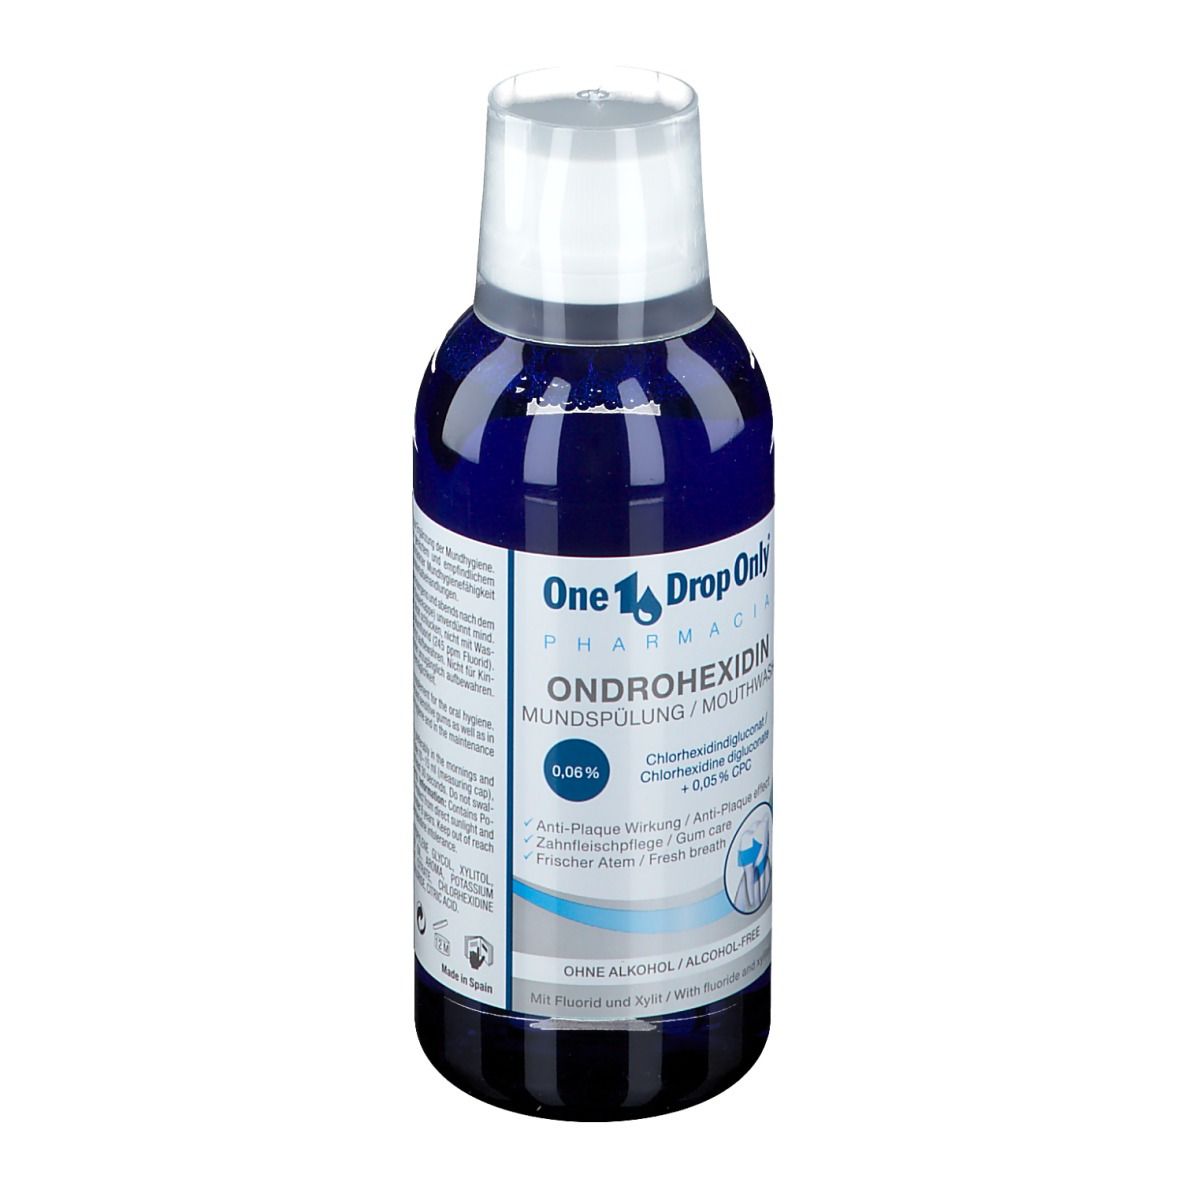 One Drop Only® Pharmacia Ondrohexidin Mundspülung